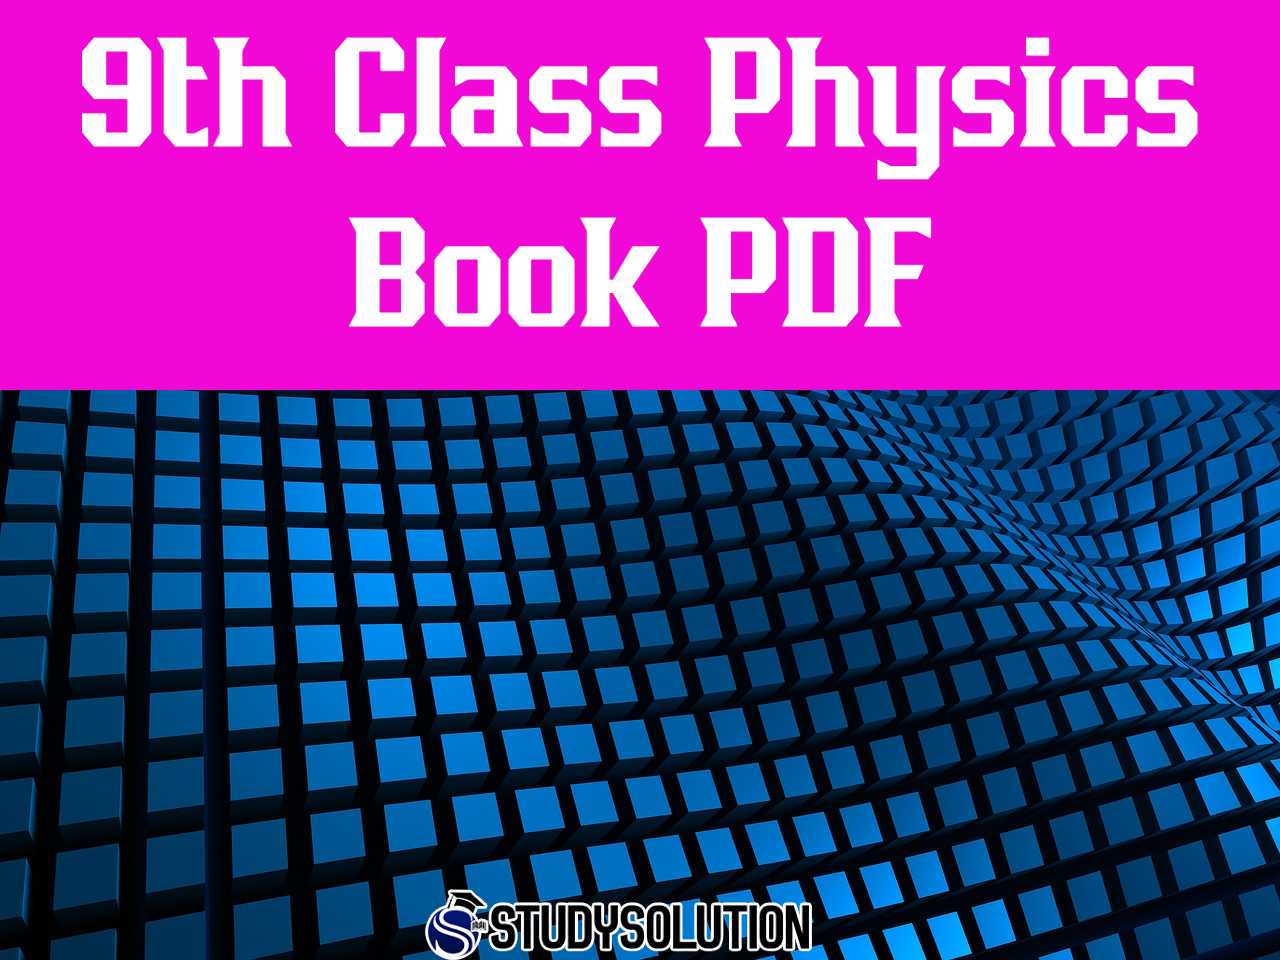 9th Class Physics Book PDF